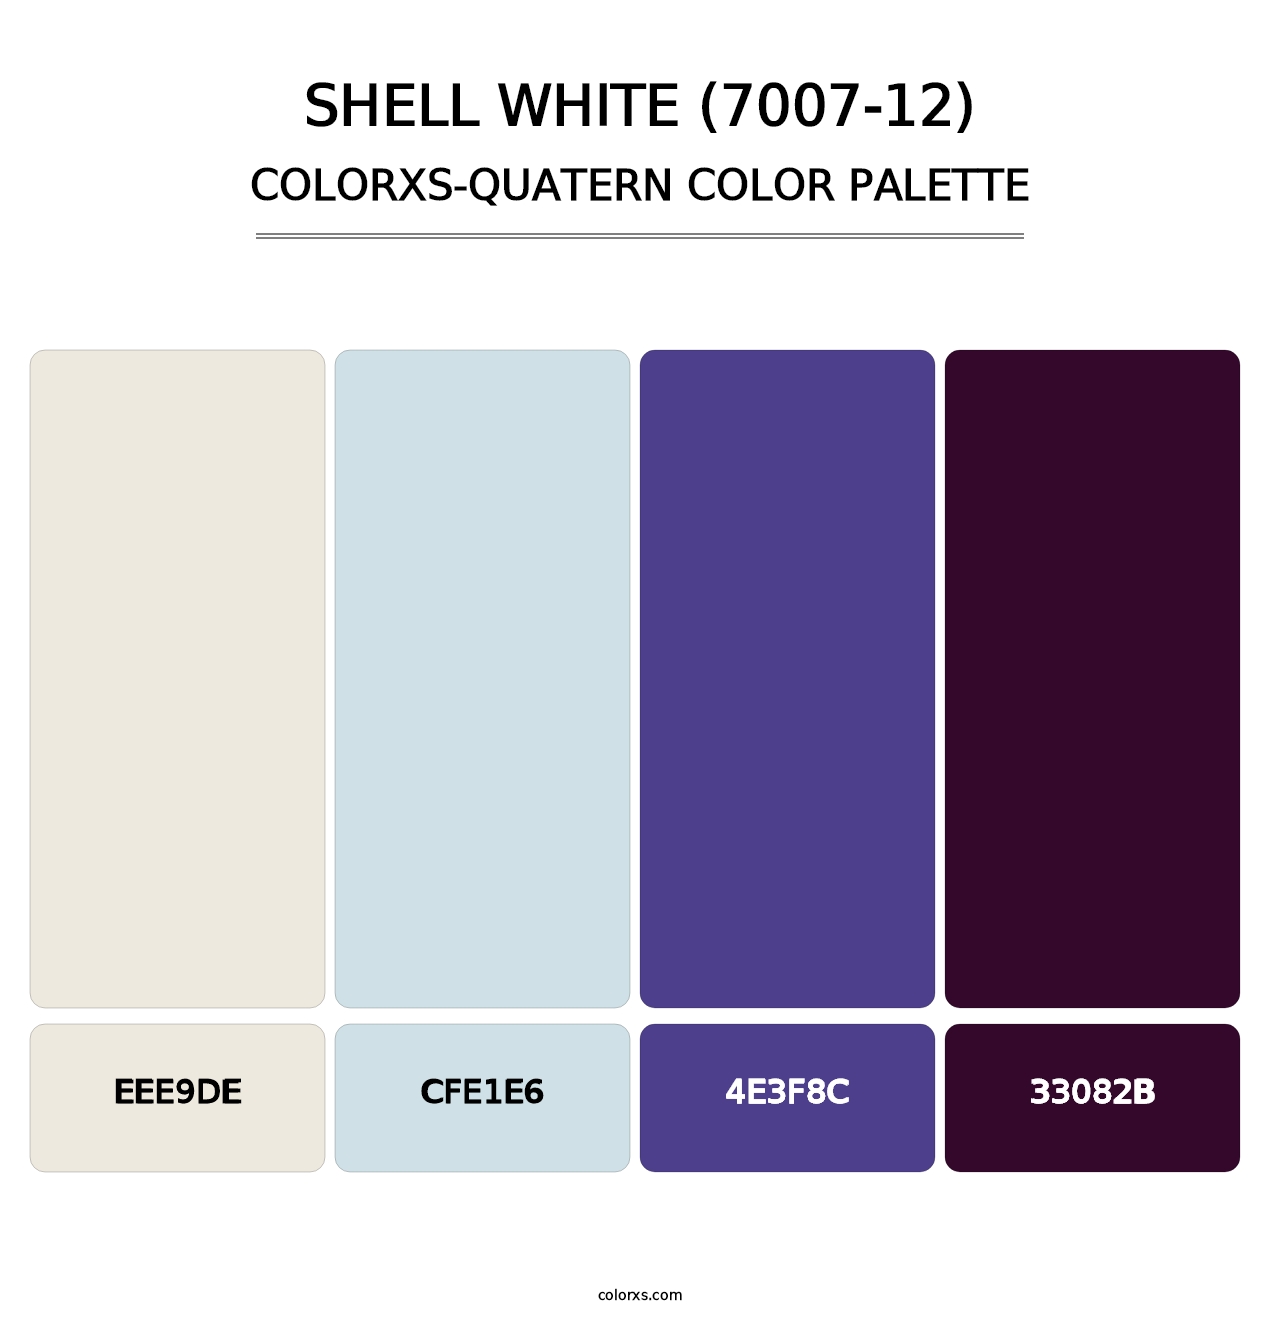 Shell White (7007-12) - Colorxs Quatern Palette